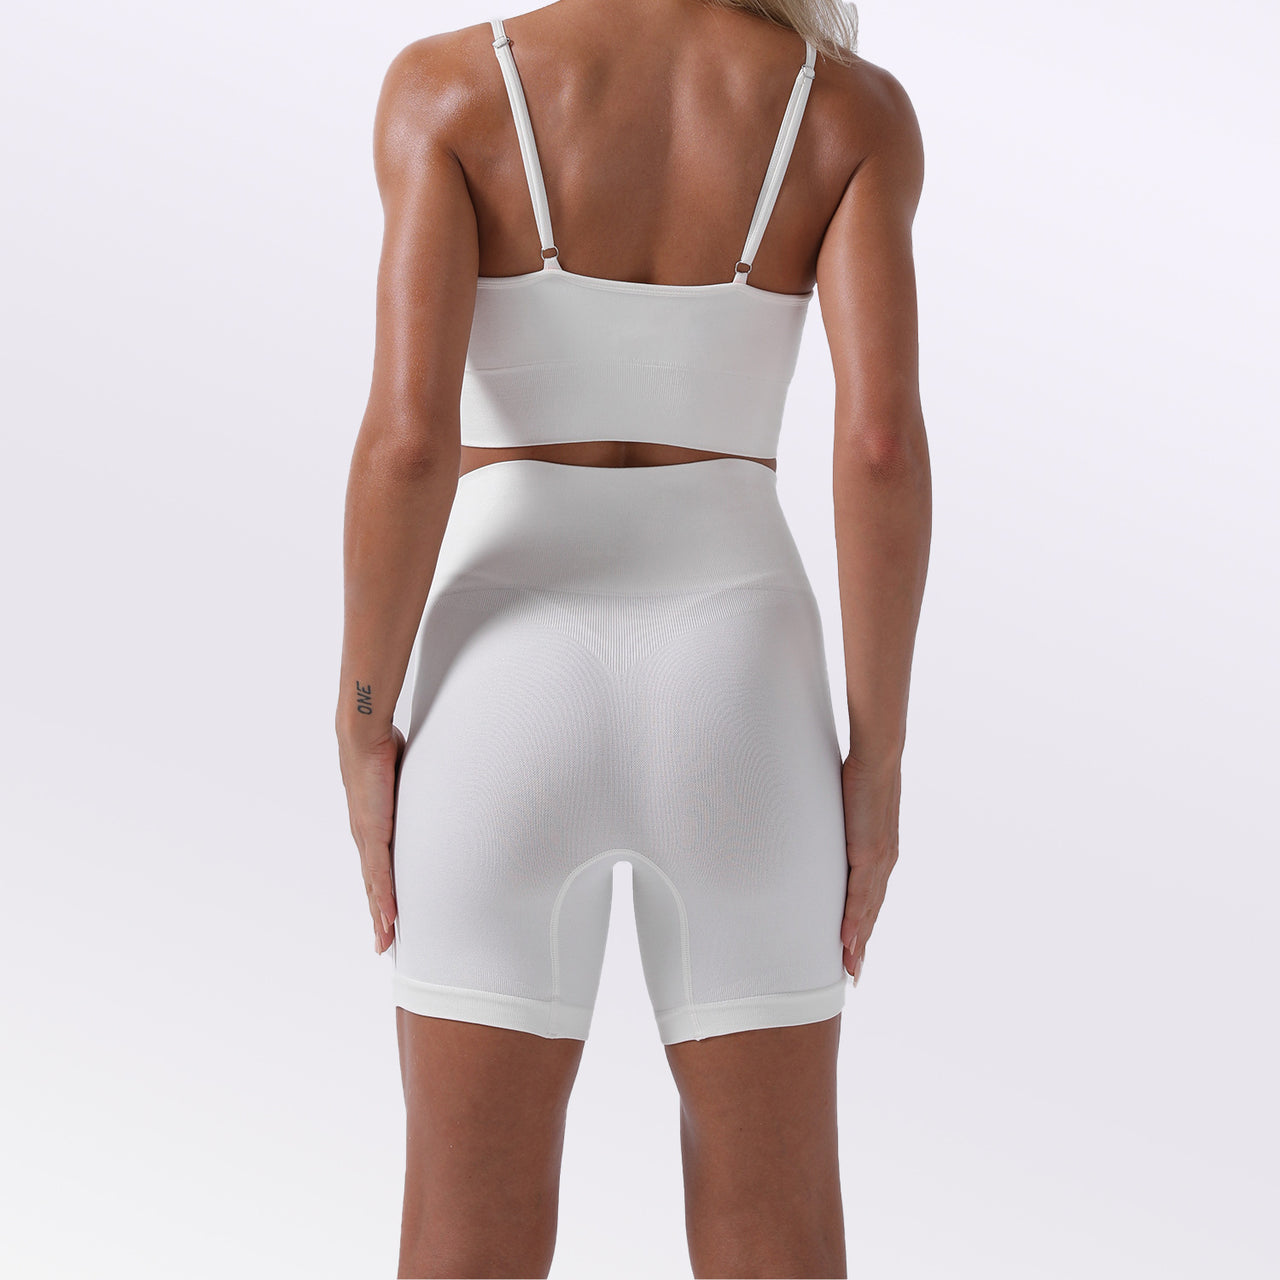 Seamless Fitness Yoga Sports Bra Shorts Suit